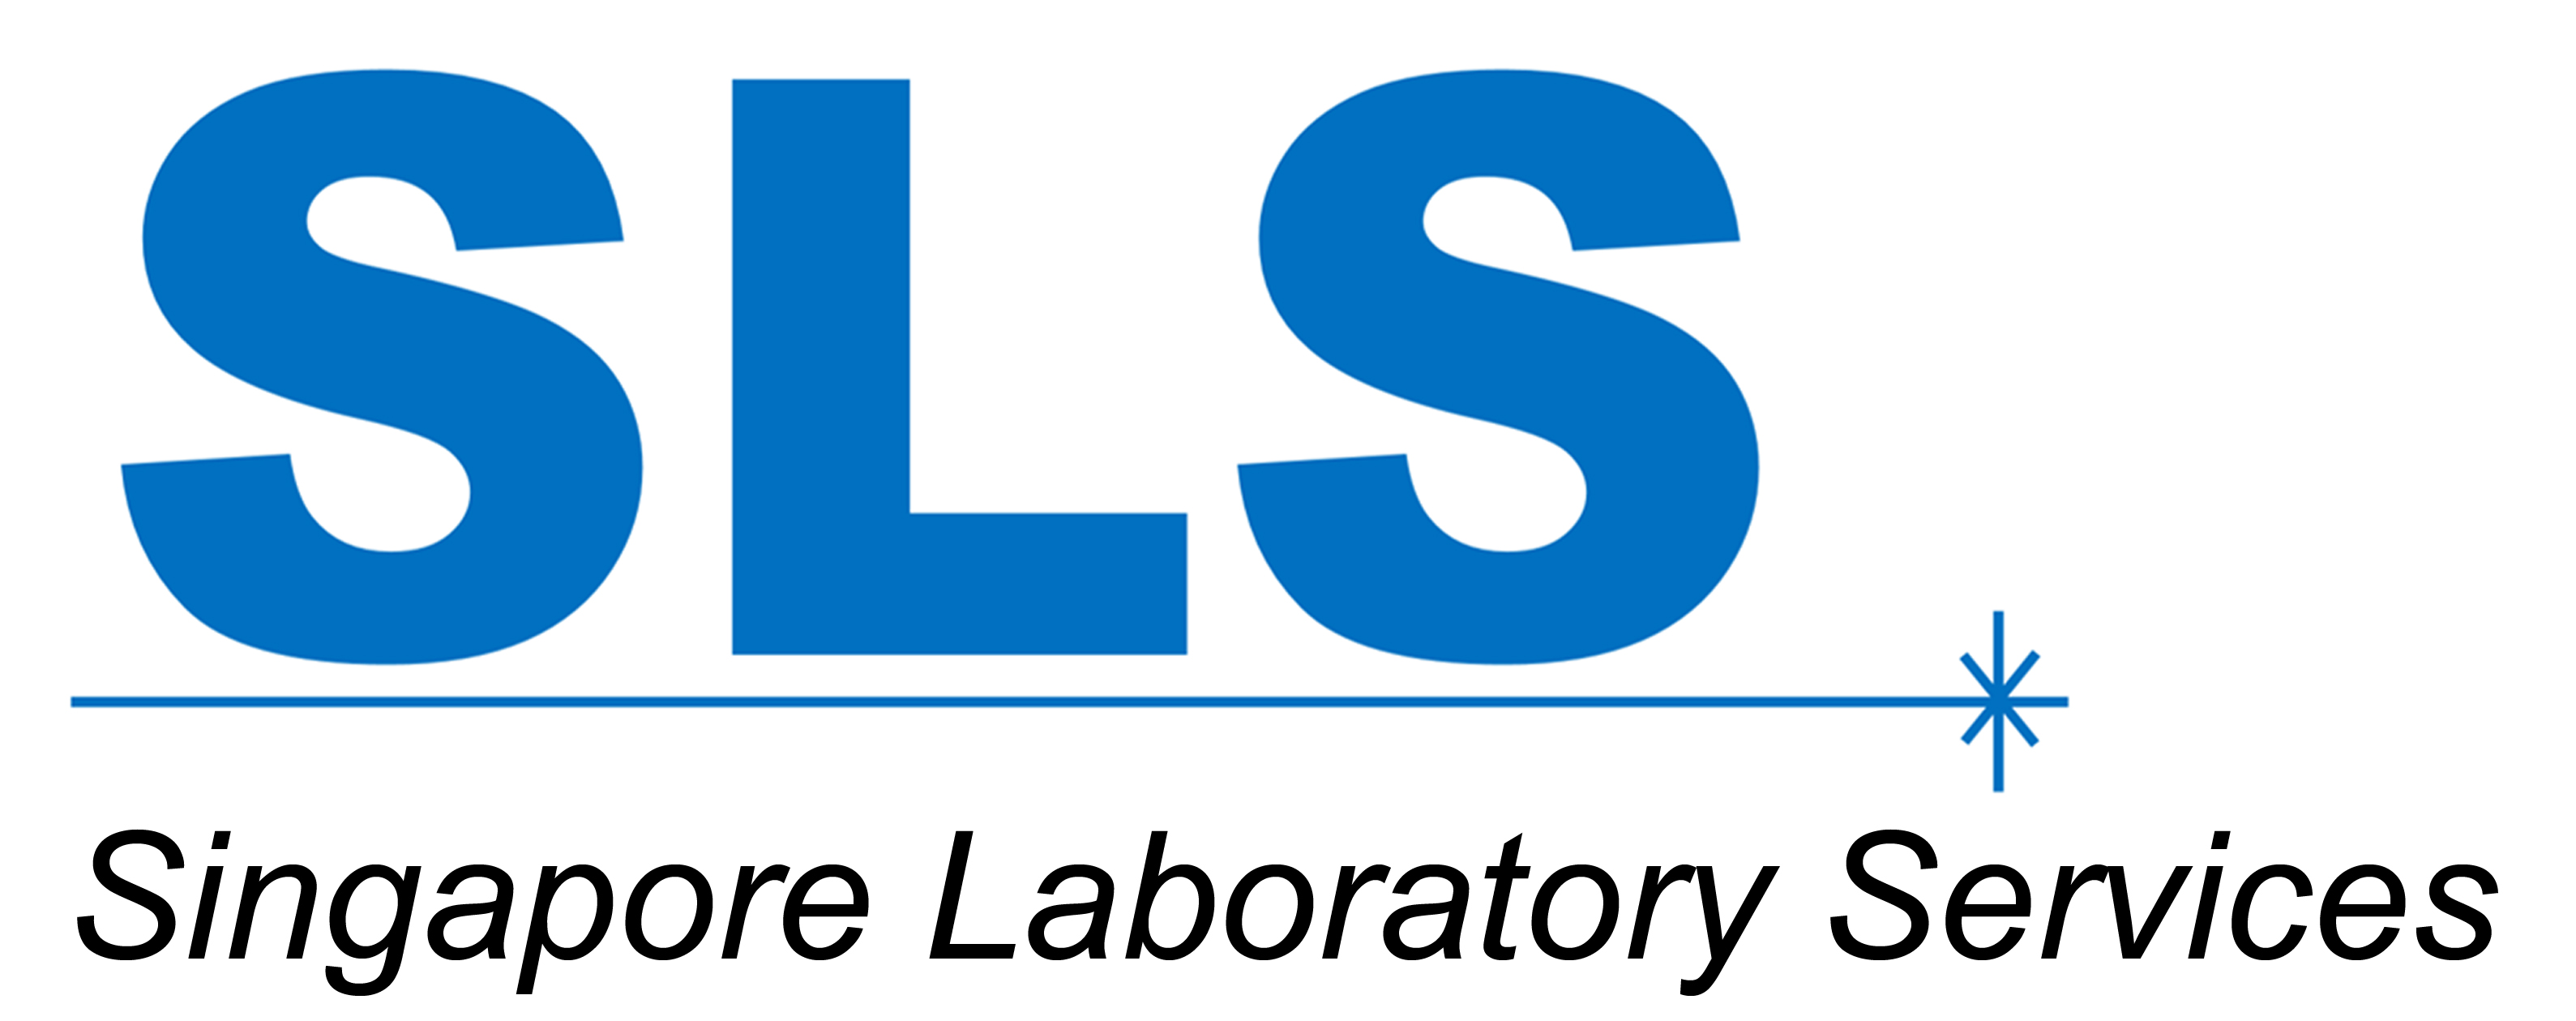 Singapore Laboratory Services